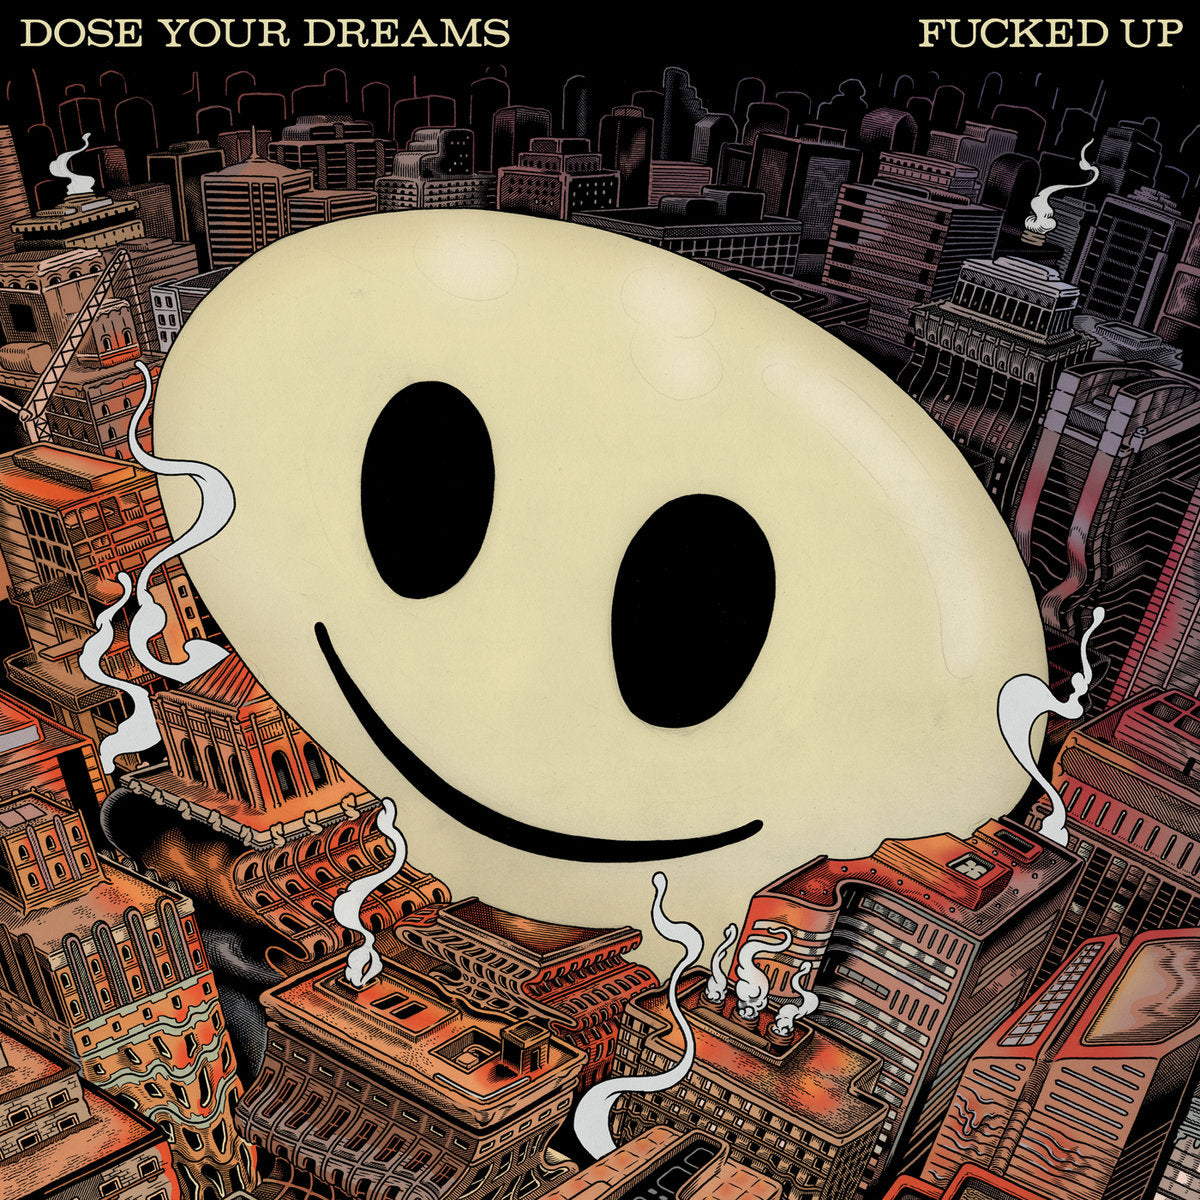 Fucked Up - Dose Your Dreams 2LP